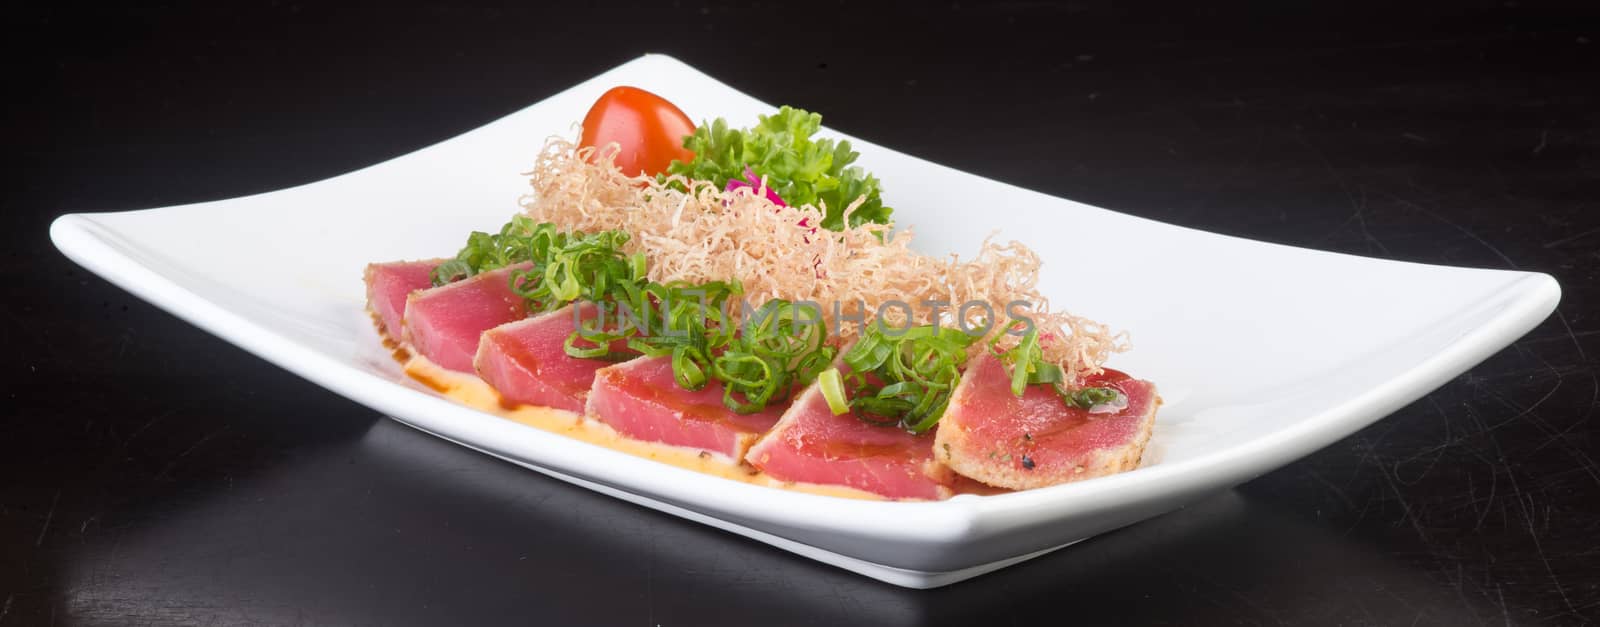 japanese cuisine. sashimi on the background by heinteh